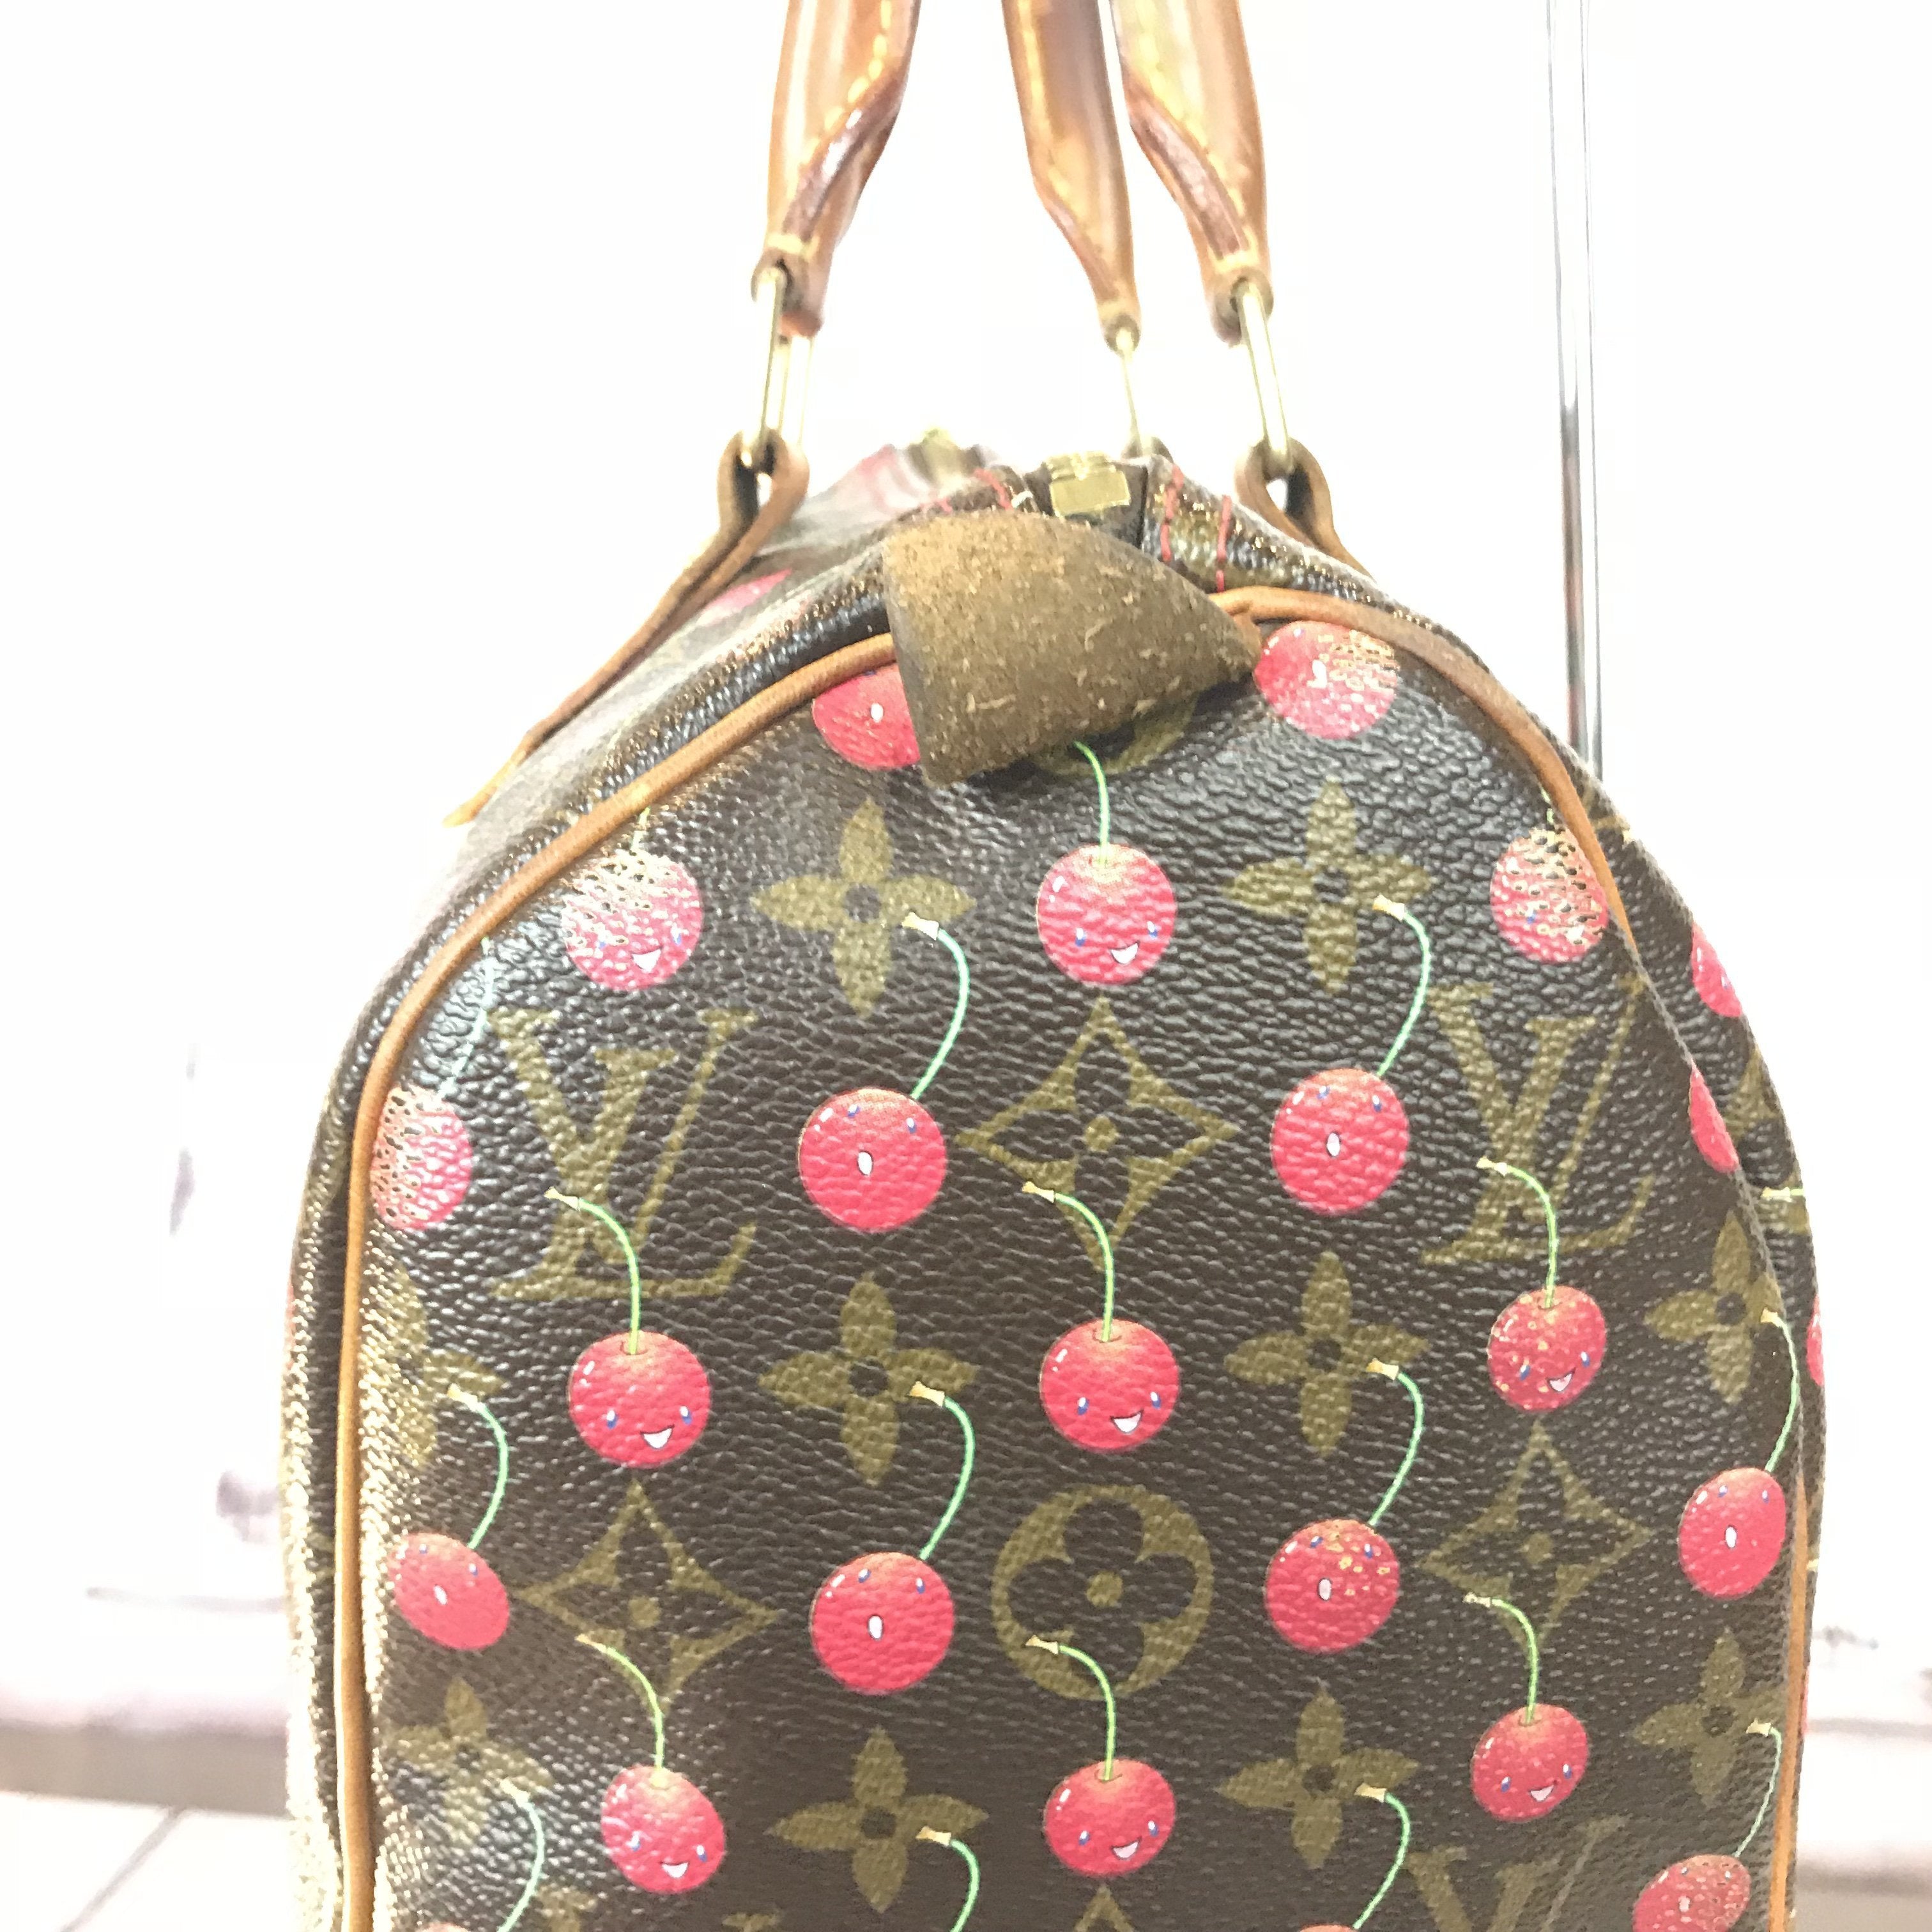 Unboxing of a Louis Vuitton cherries speedy 25 bag in rare cherry design  gorgeous handbag 